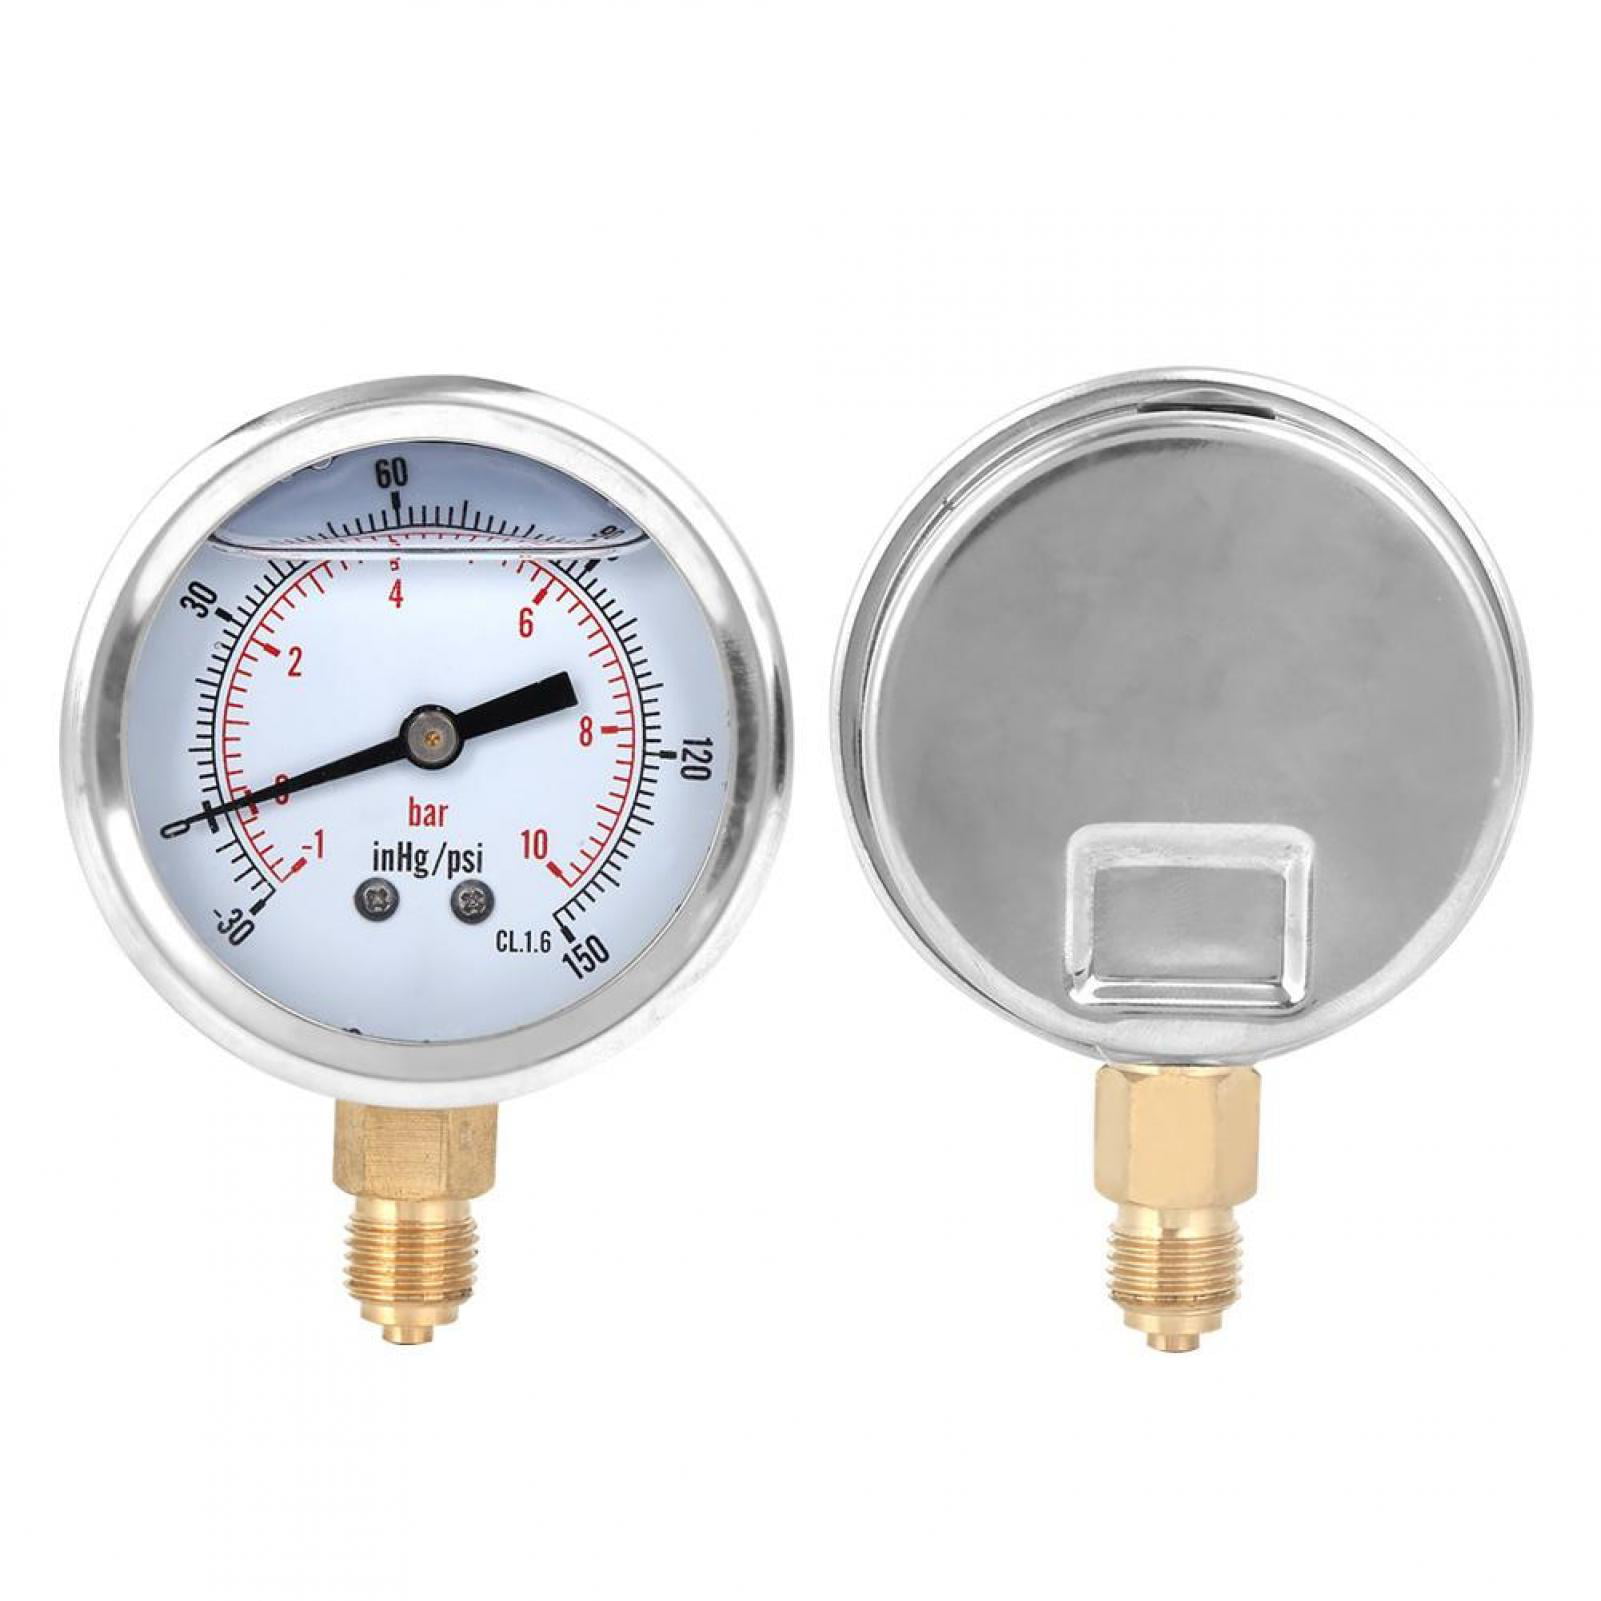 1/4BSP Oil Filled Pressure Gauge 0-300psi Stainless Steel Radial Pressure Gauge Manometer for Machinery and Petroleum 